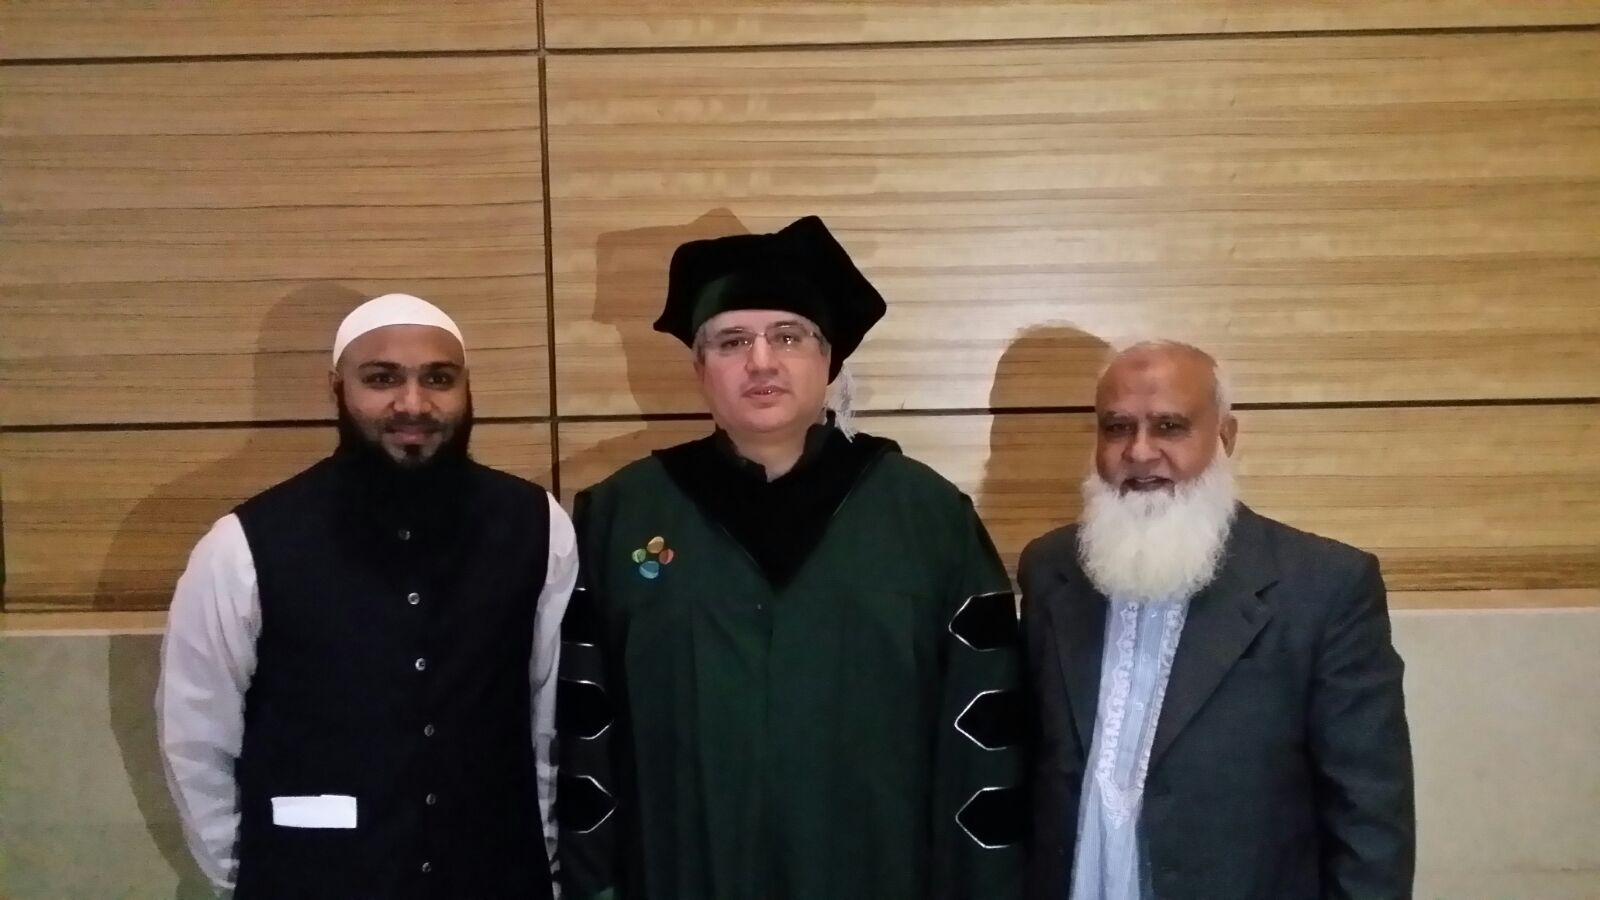 Professor Alouini with Imran Ansari and his father during graduation ceremony